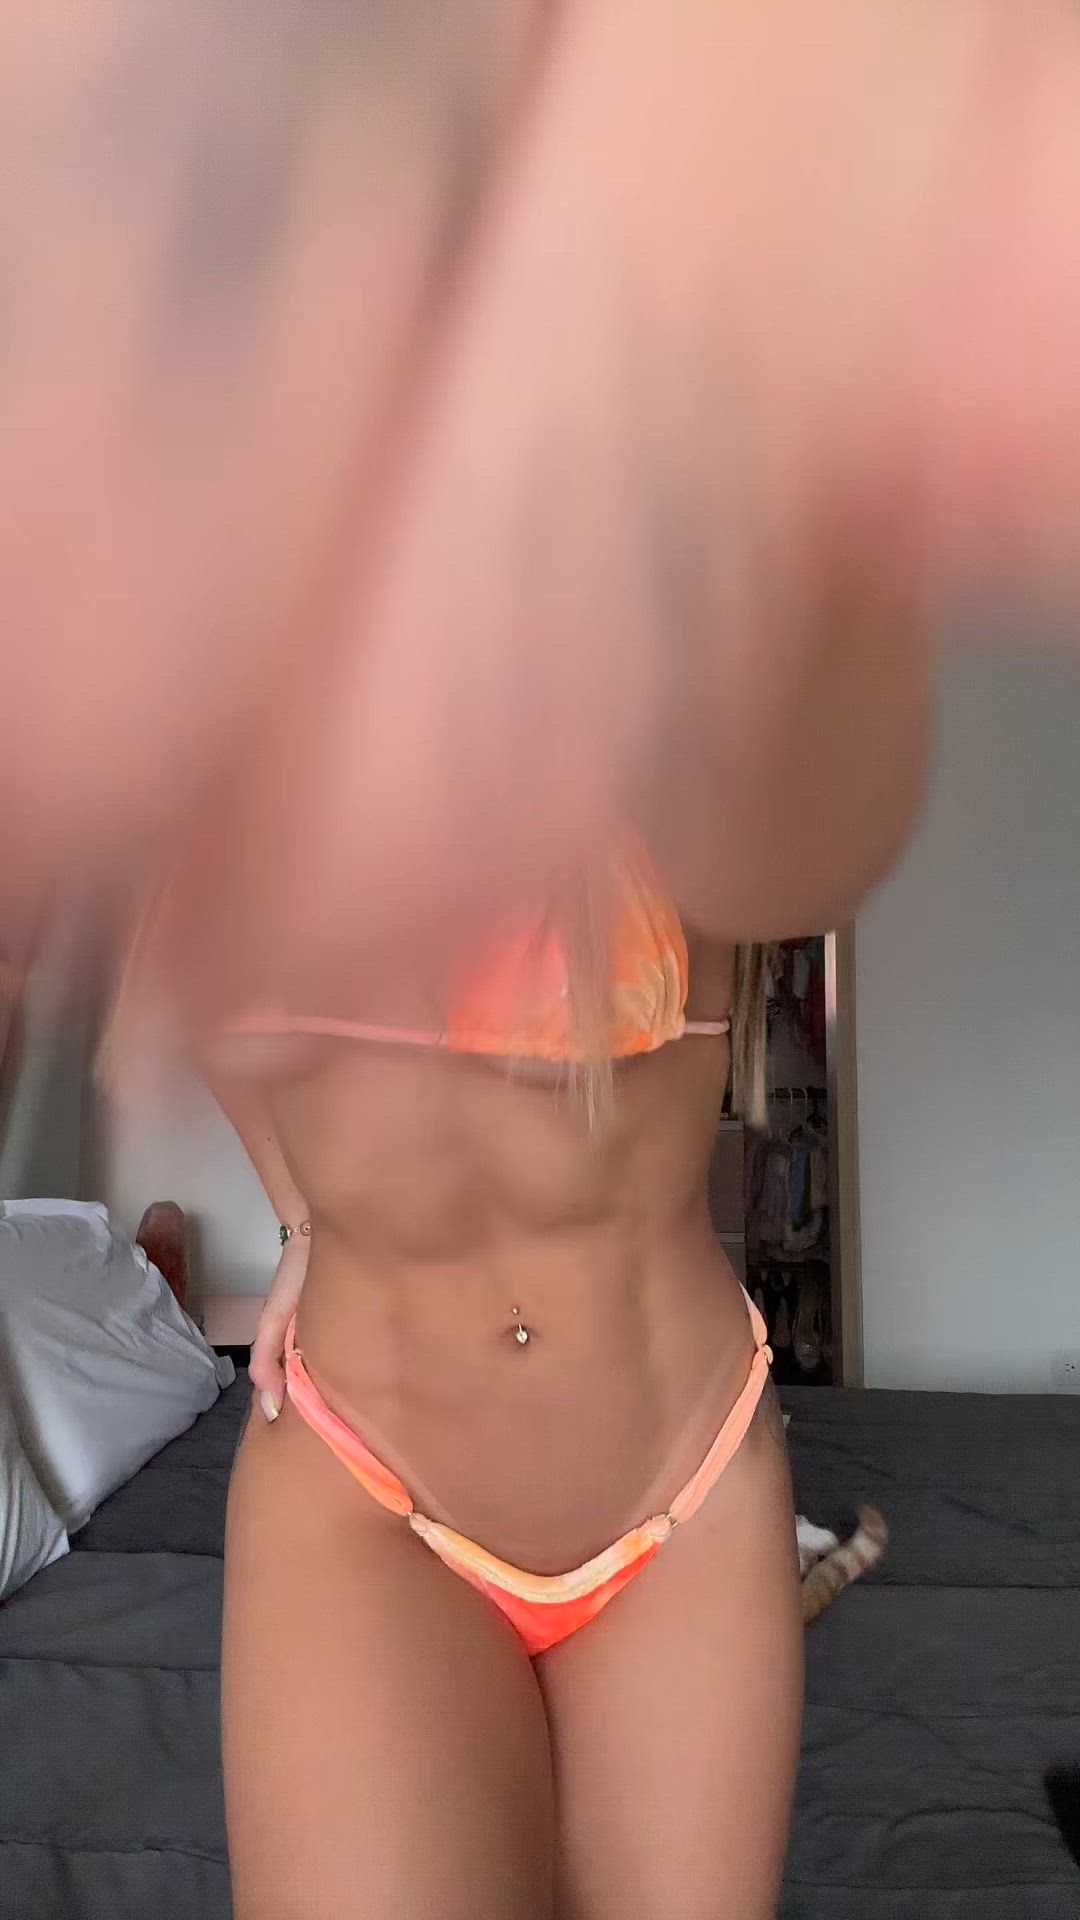 Ass porn video with onlyfans model imdani <strong>@danitabaresb</strong>